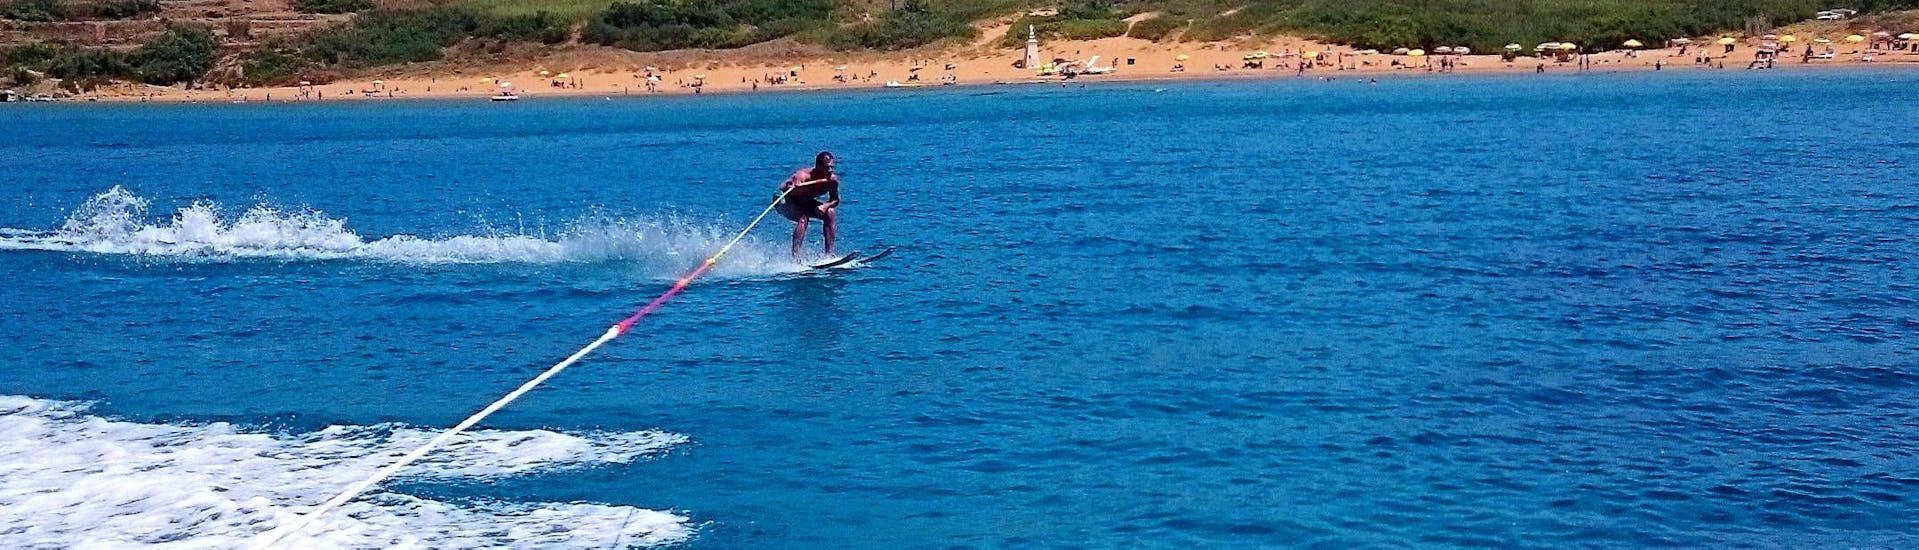 water-skiing-at-ramla-bay-hero